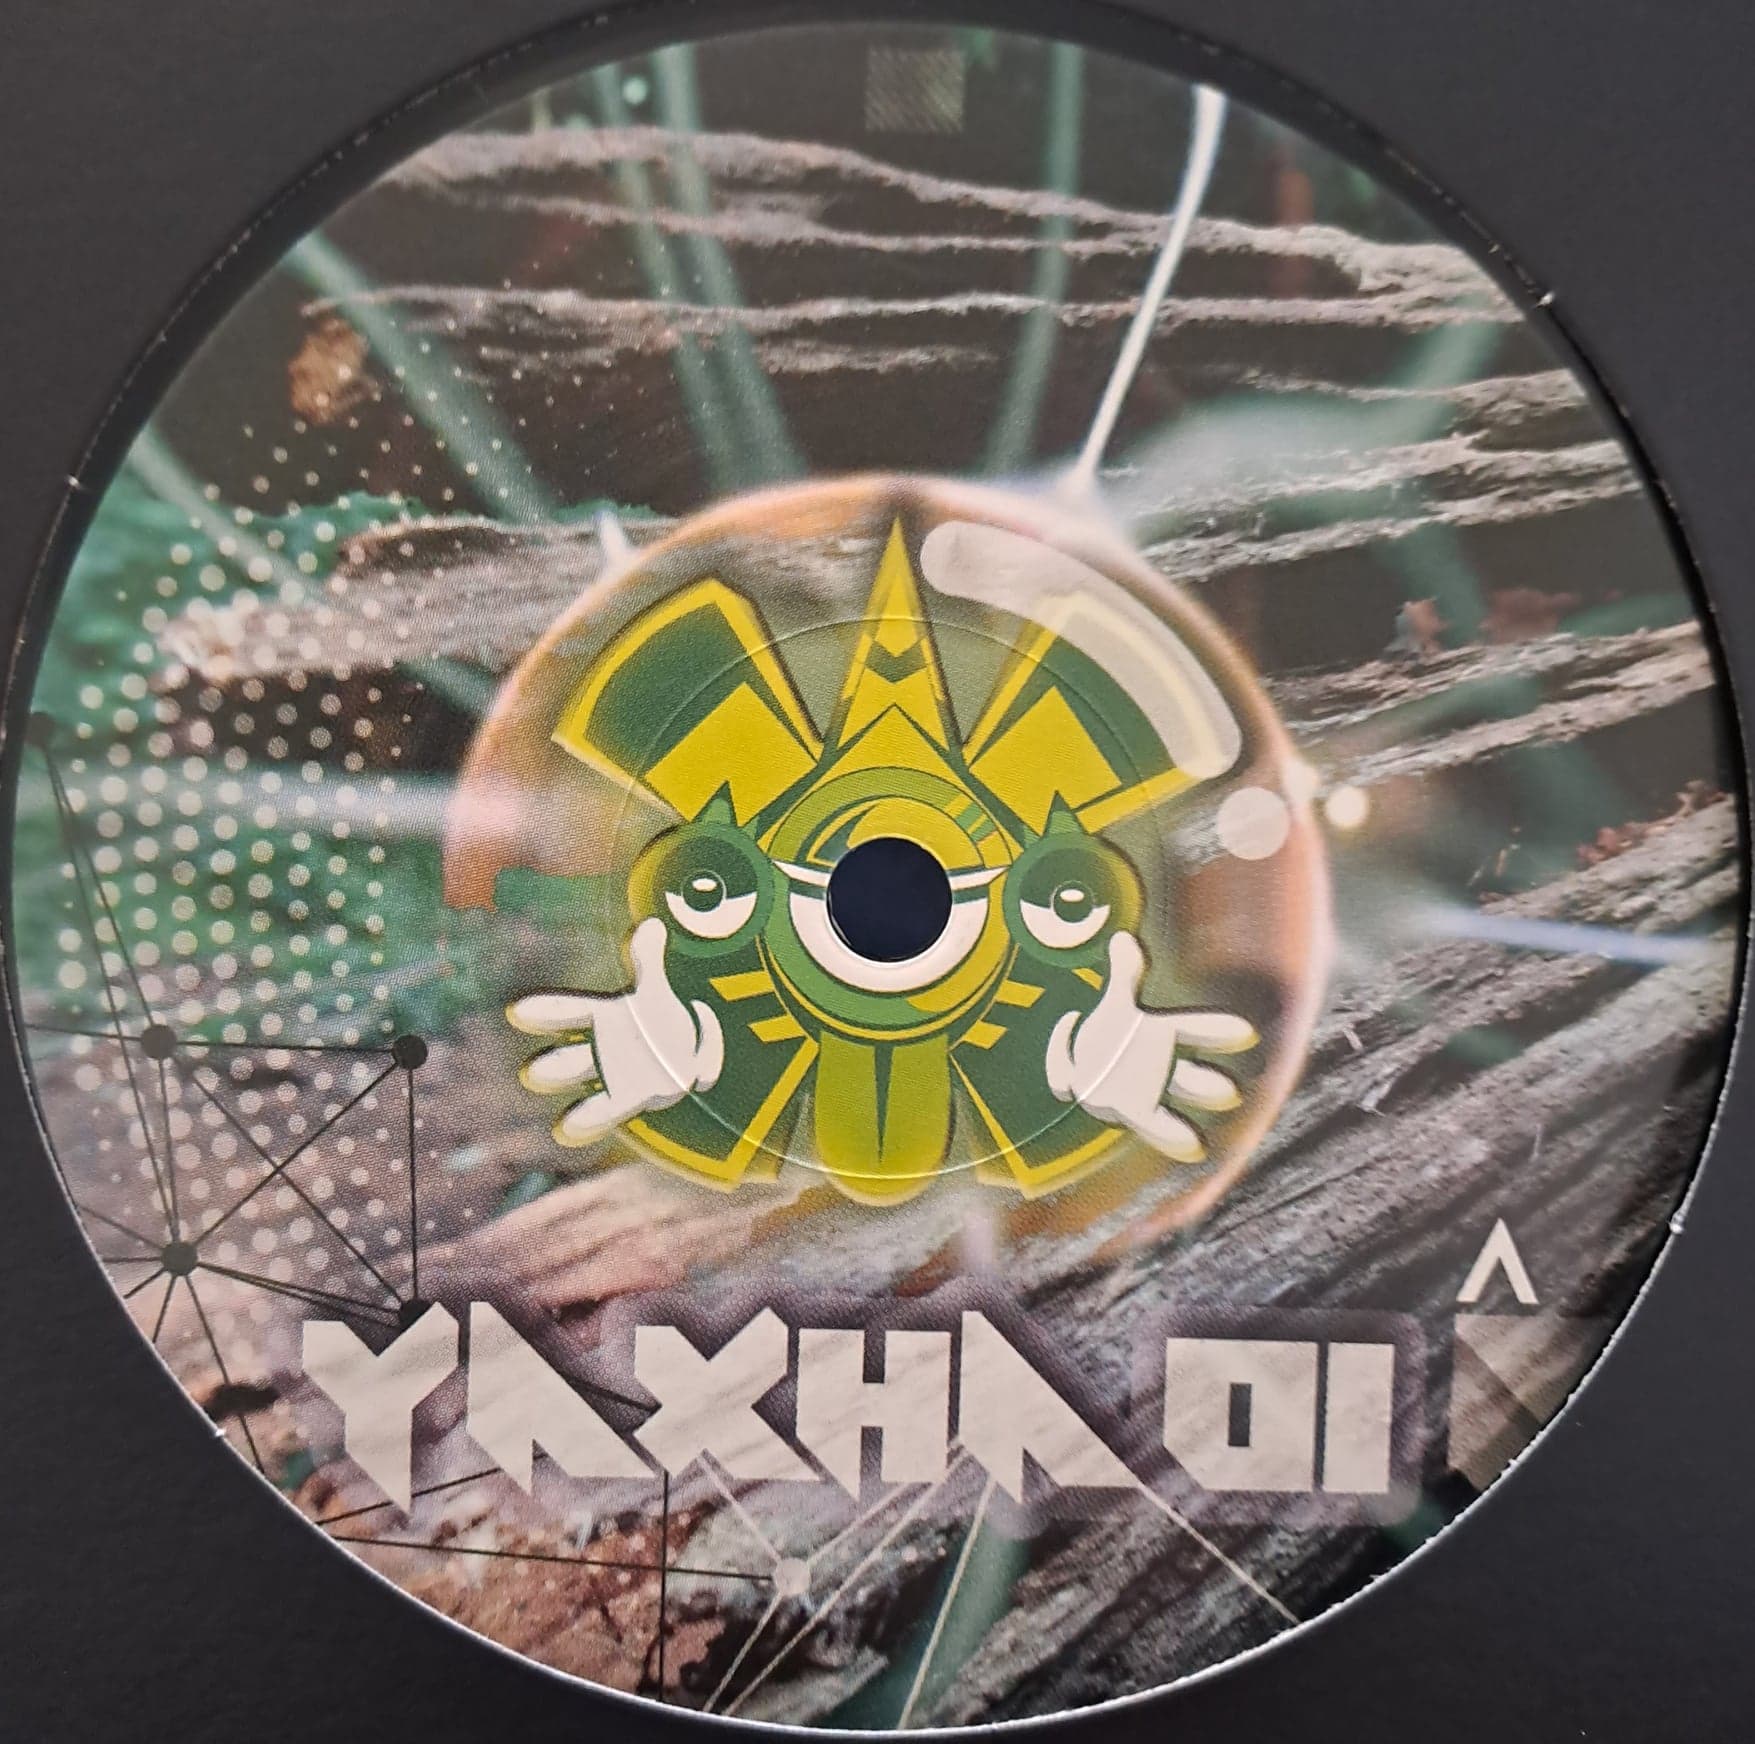 Yaxha 01 - vinyle Breakbeat
